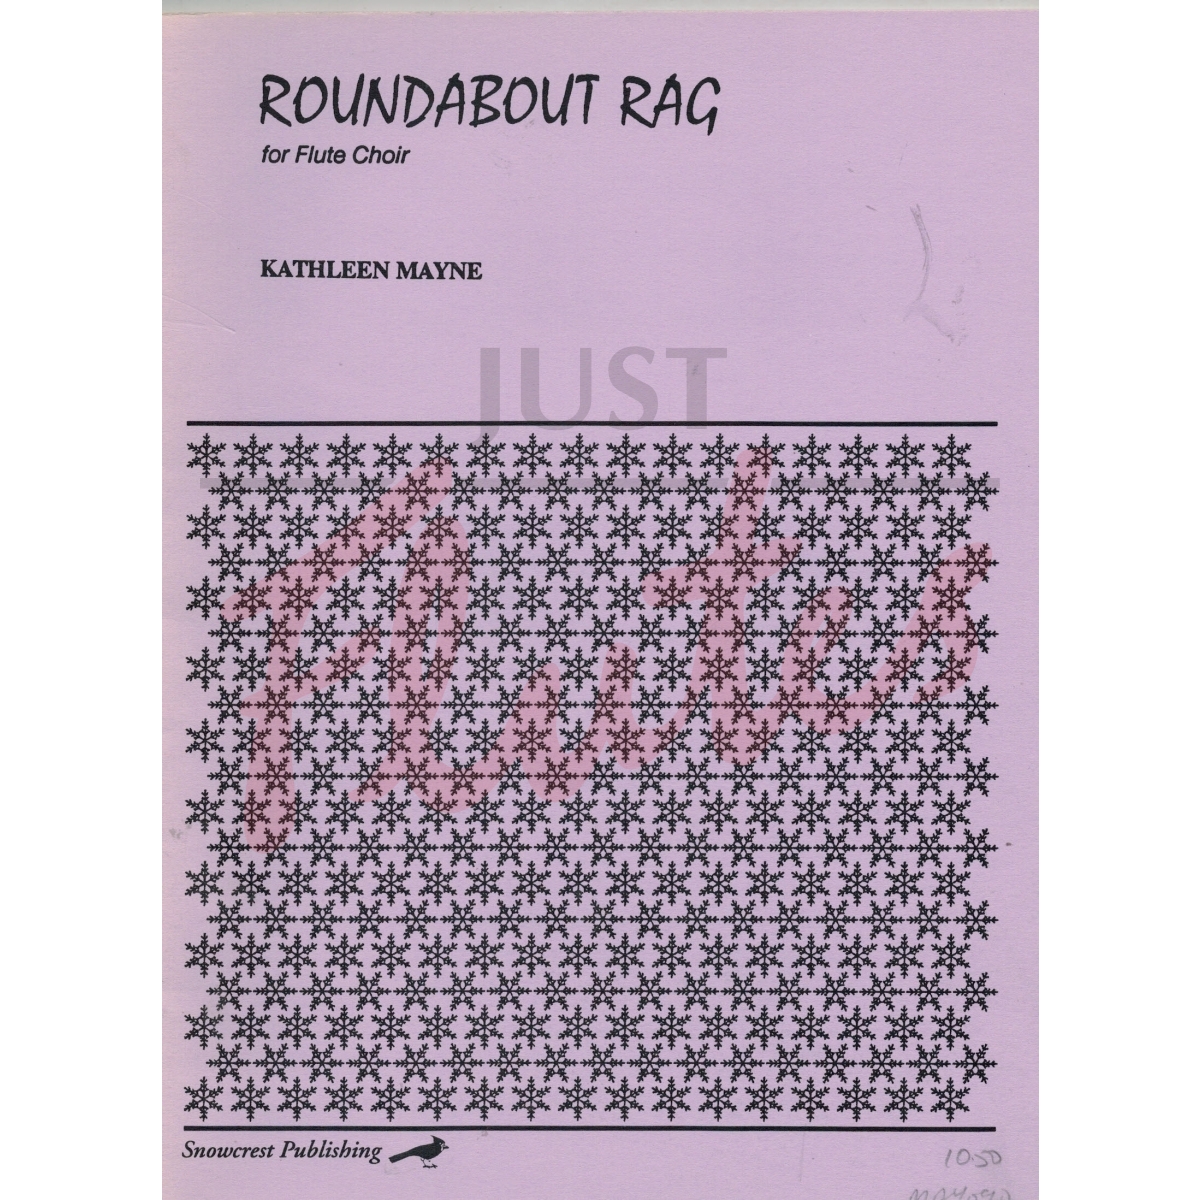 Roundabout Rag